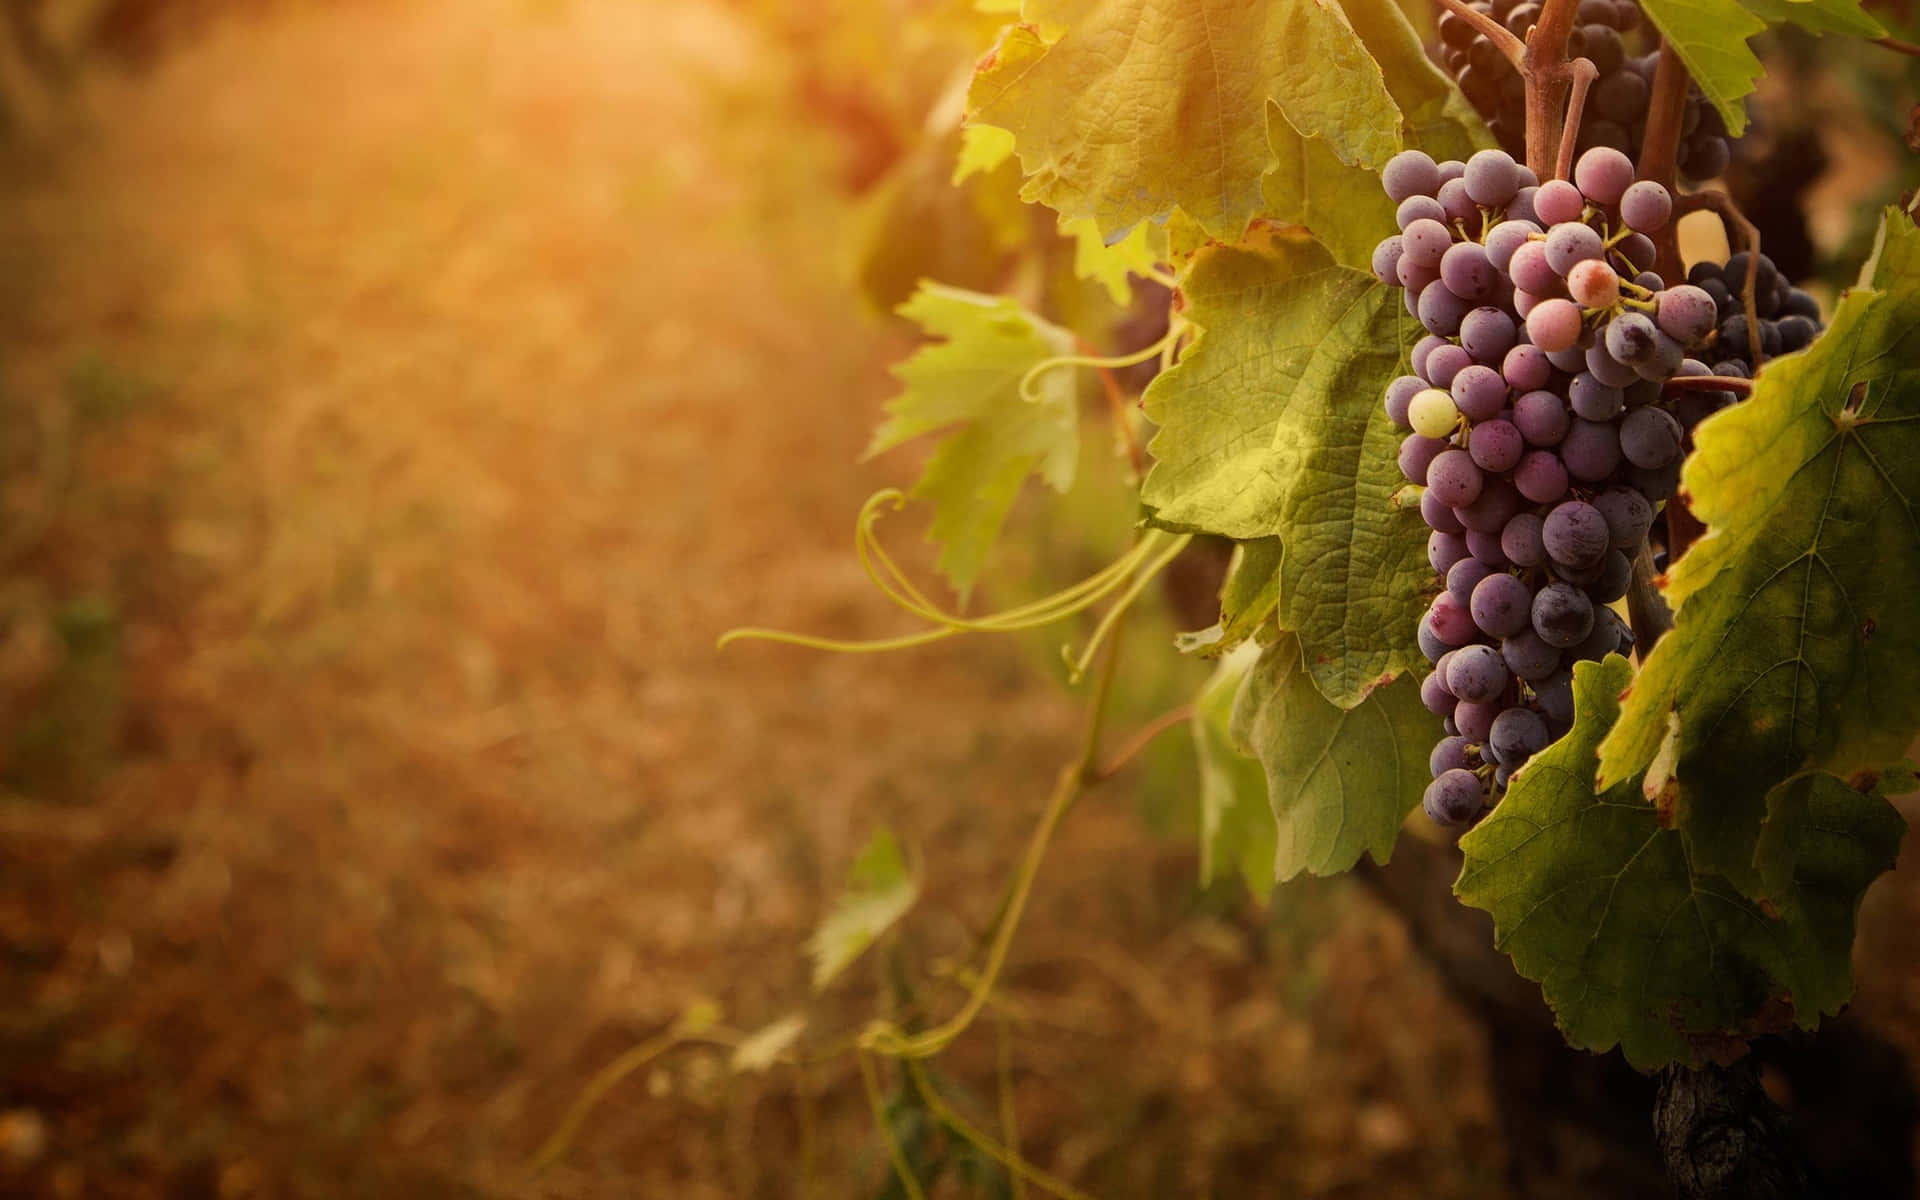 Enjoy the juicy sweetness of fresh grapes.